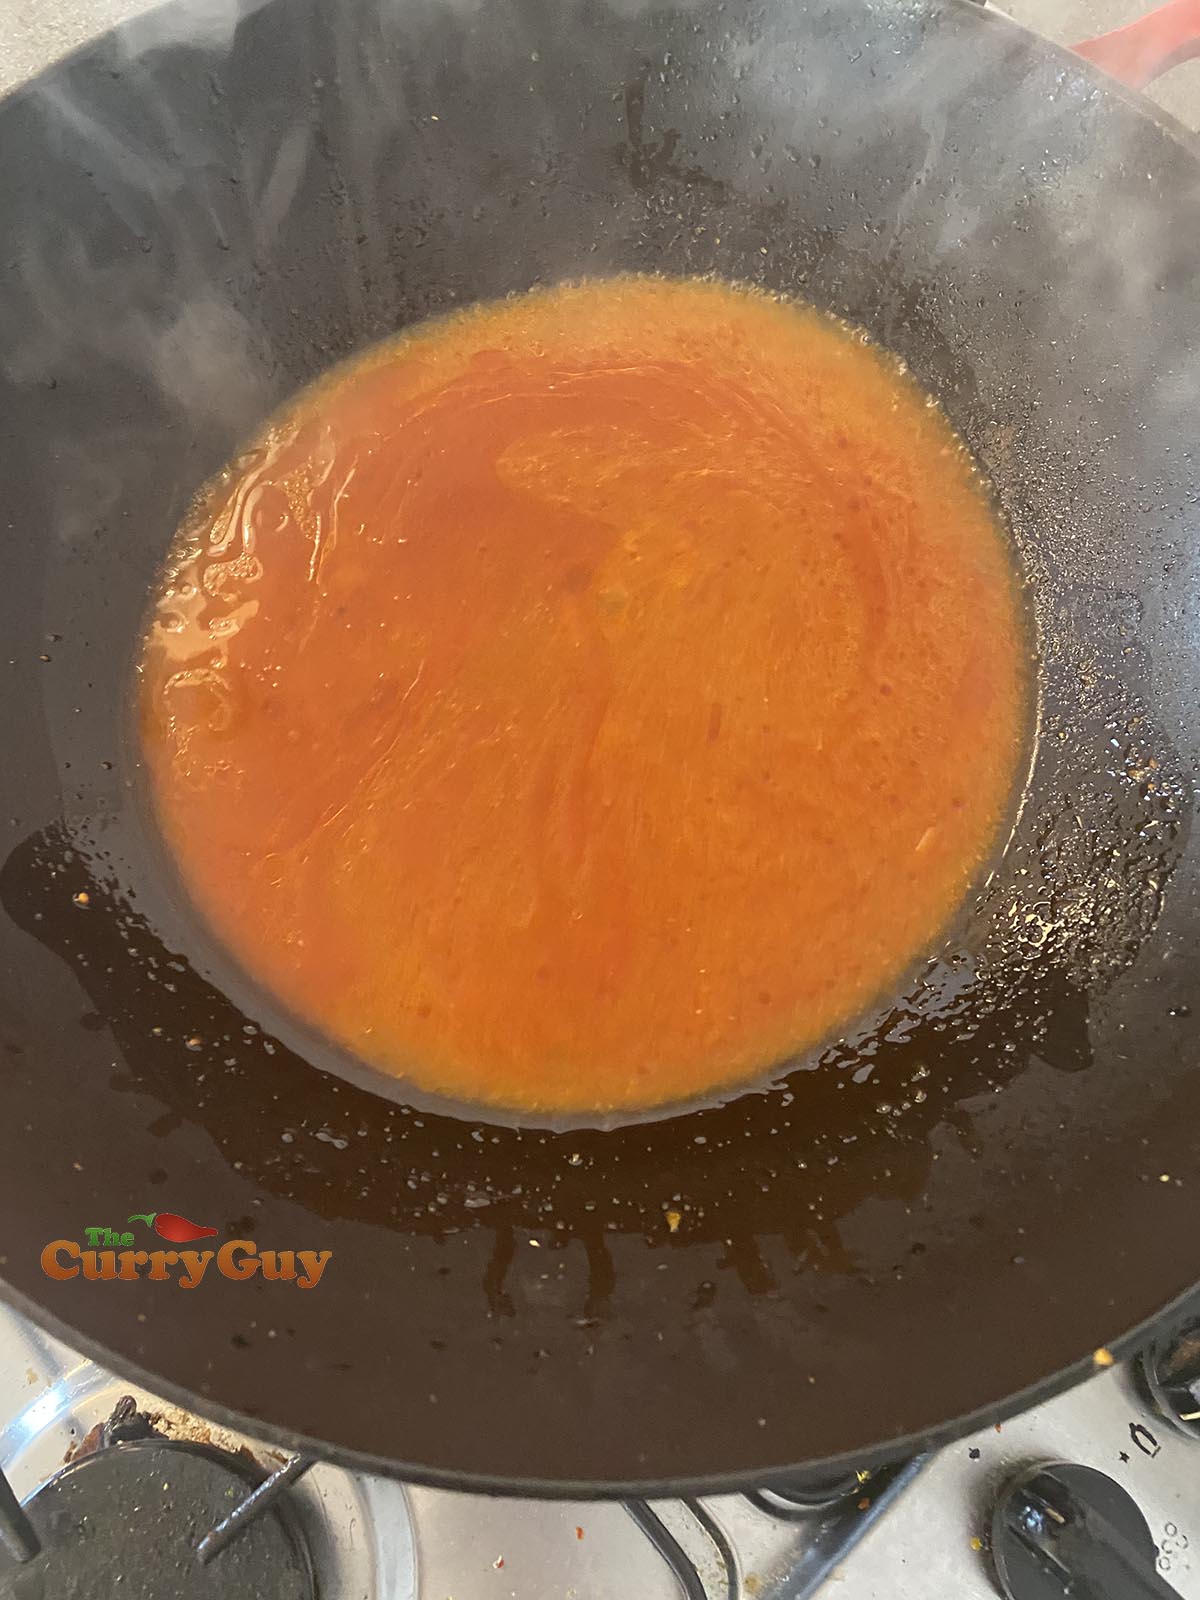 Simmering sauce